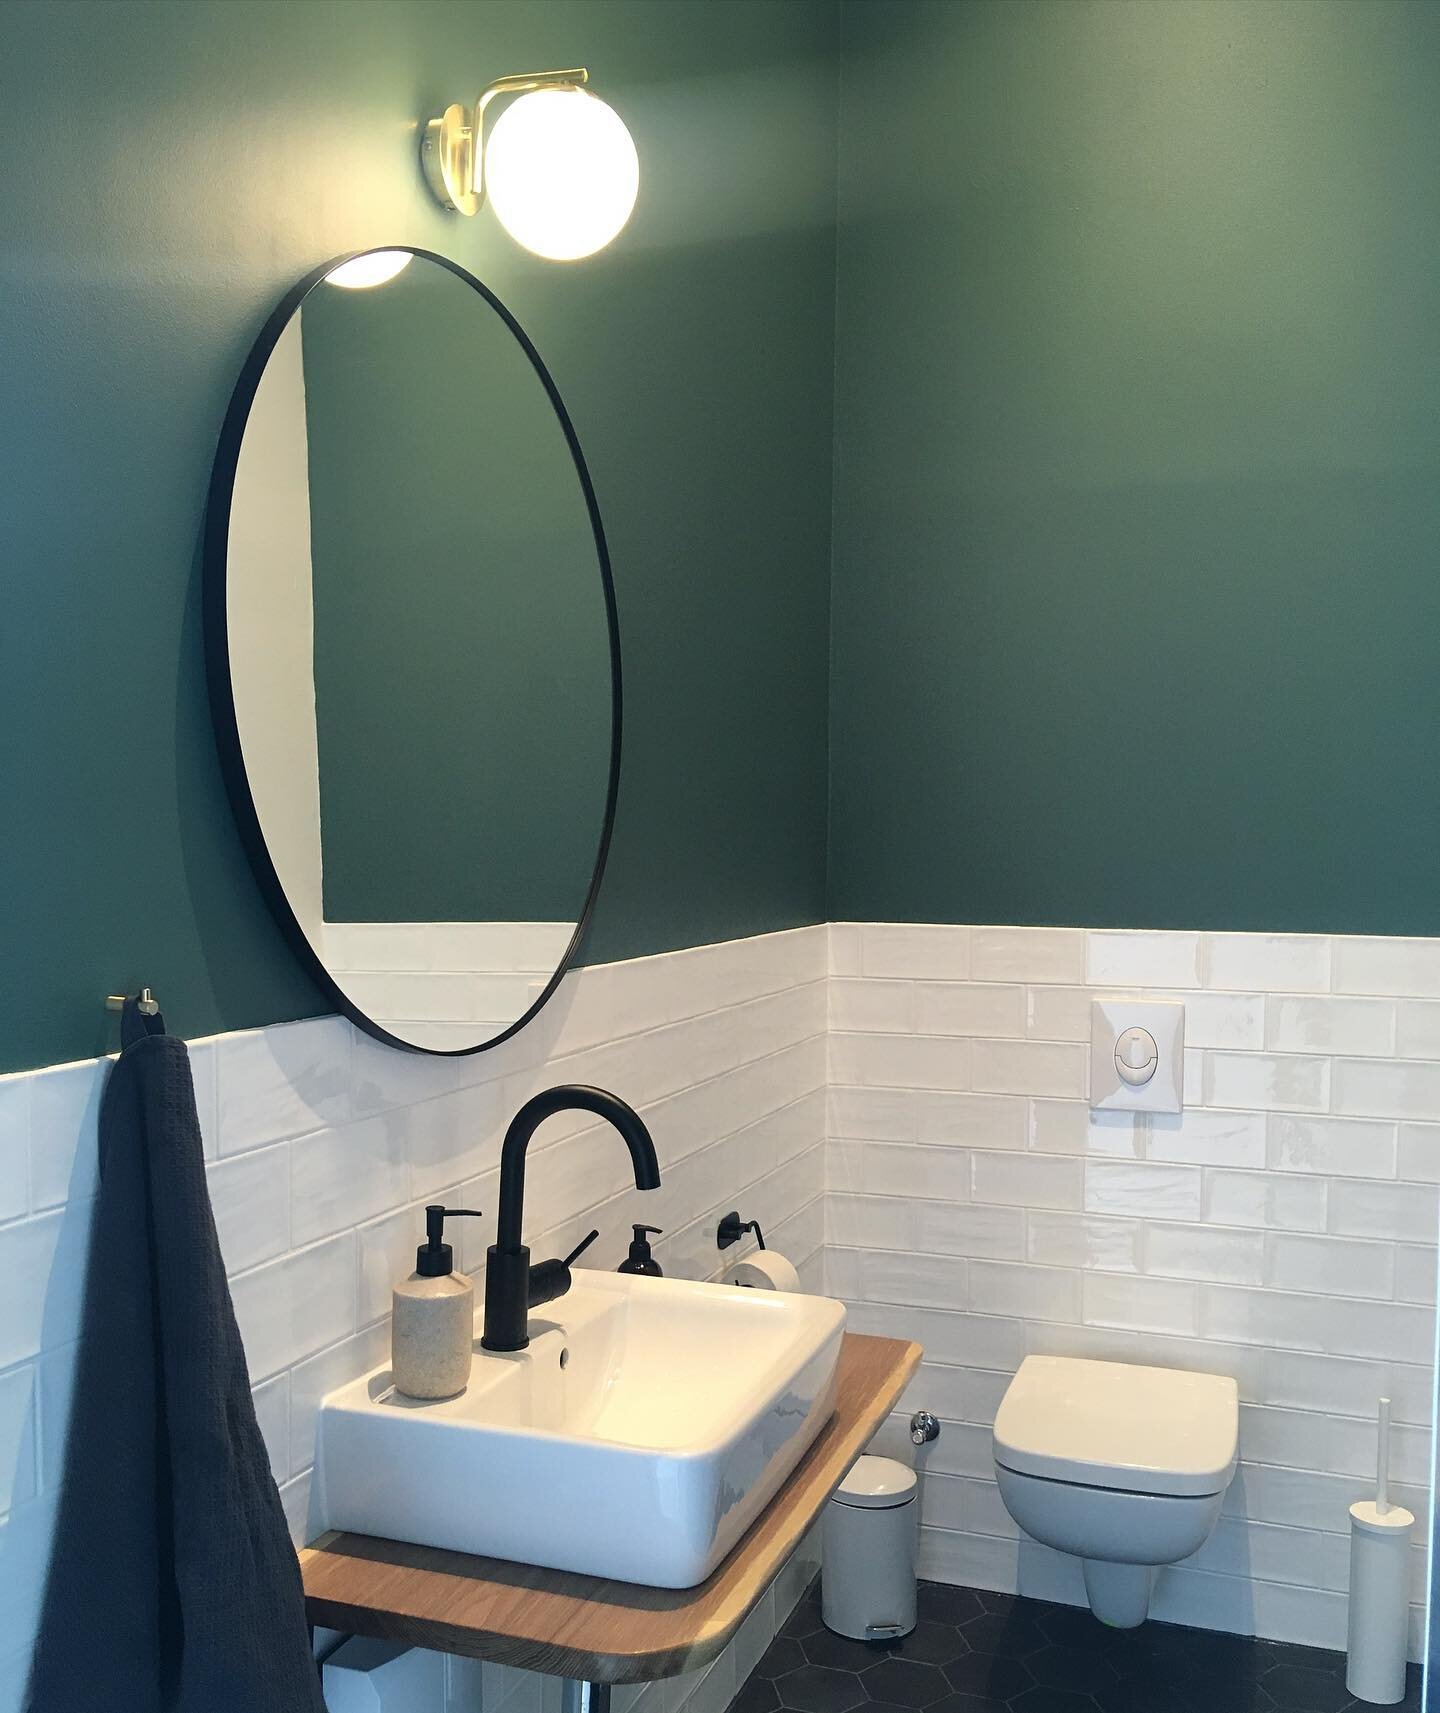 Which do you prefer, green or white? 🤔
#paintcolour #greenbathroom #berlinoffice #berlininteriordesign